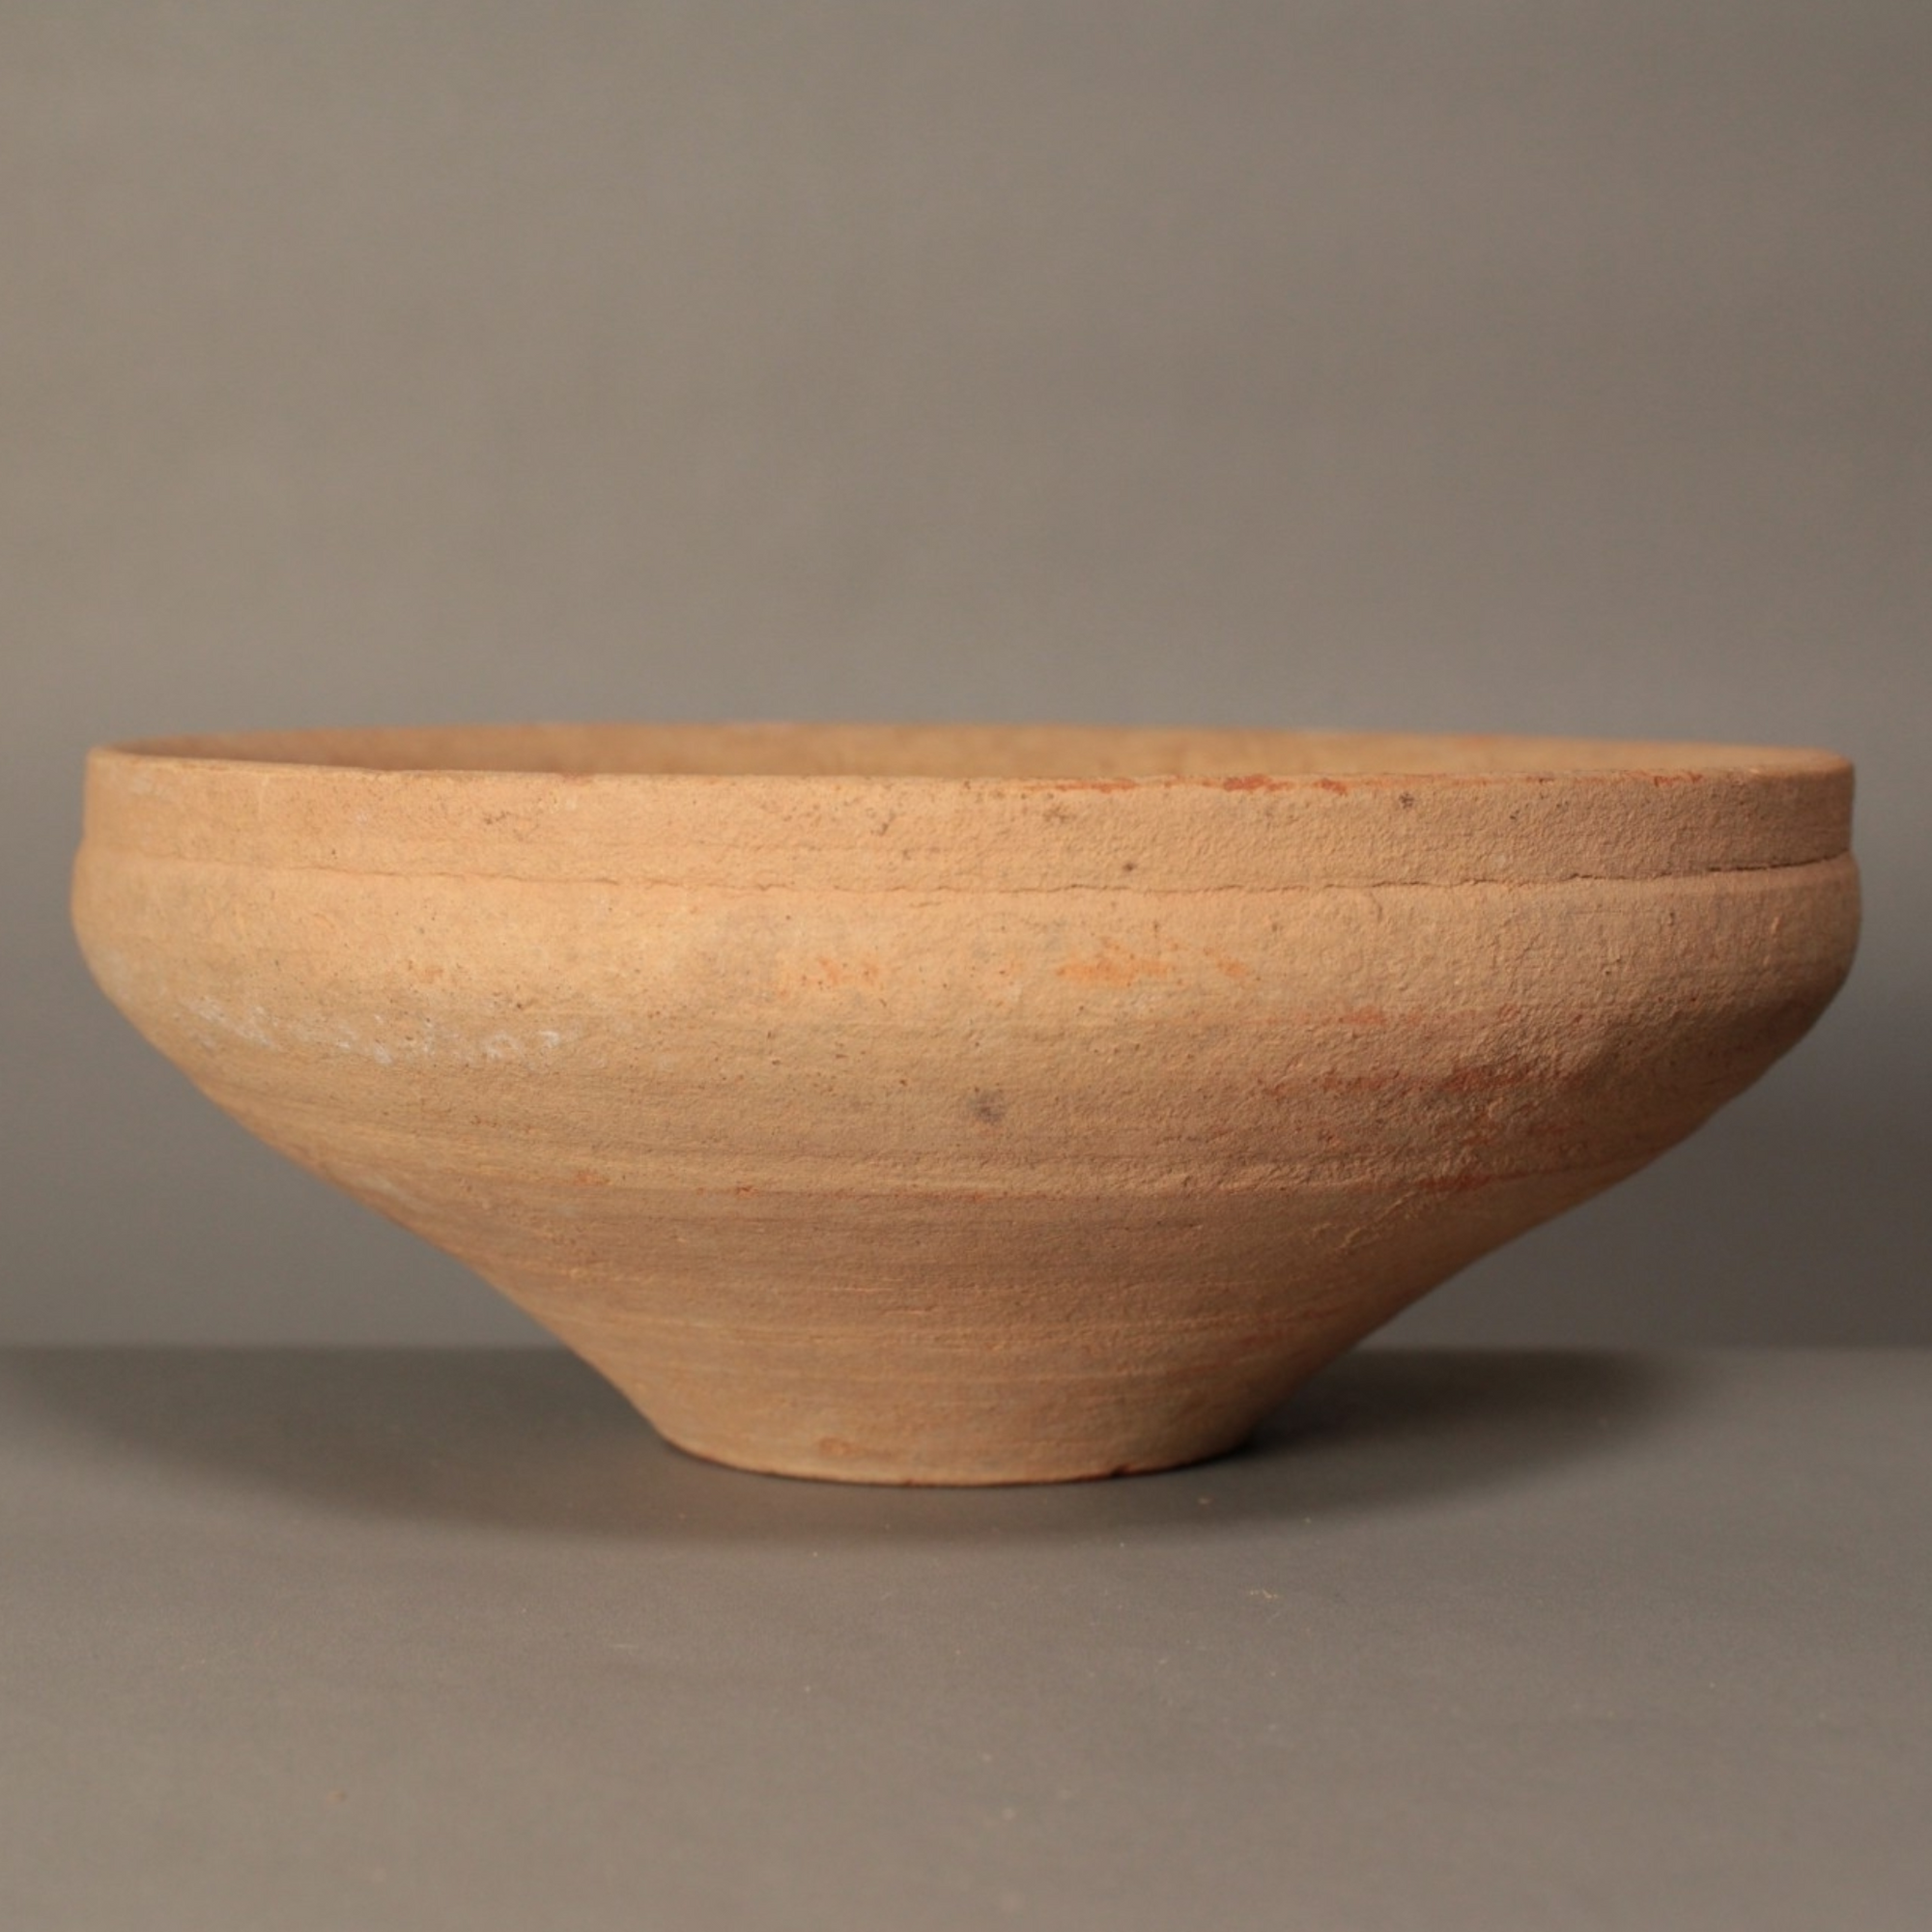 Roman Terracota Buffware Bowl, 6.0 inch - c. 1 to 400 CE - Roman Empire - 10/10/23 Auction